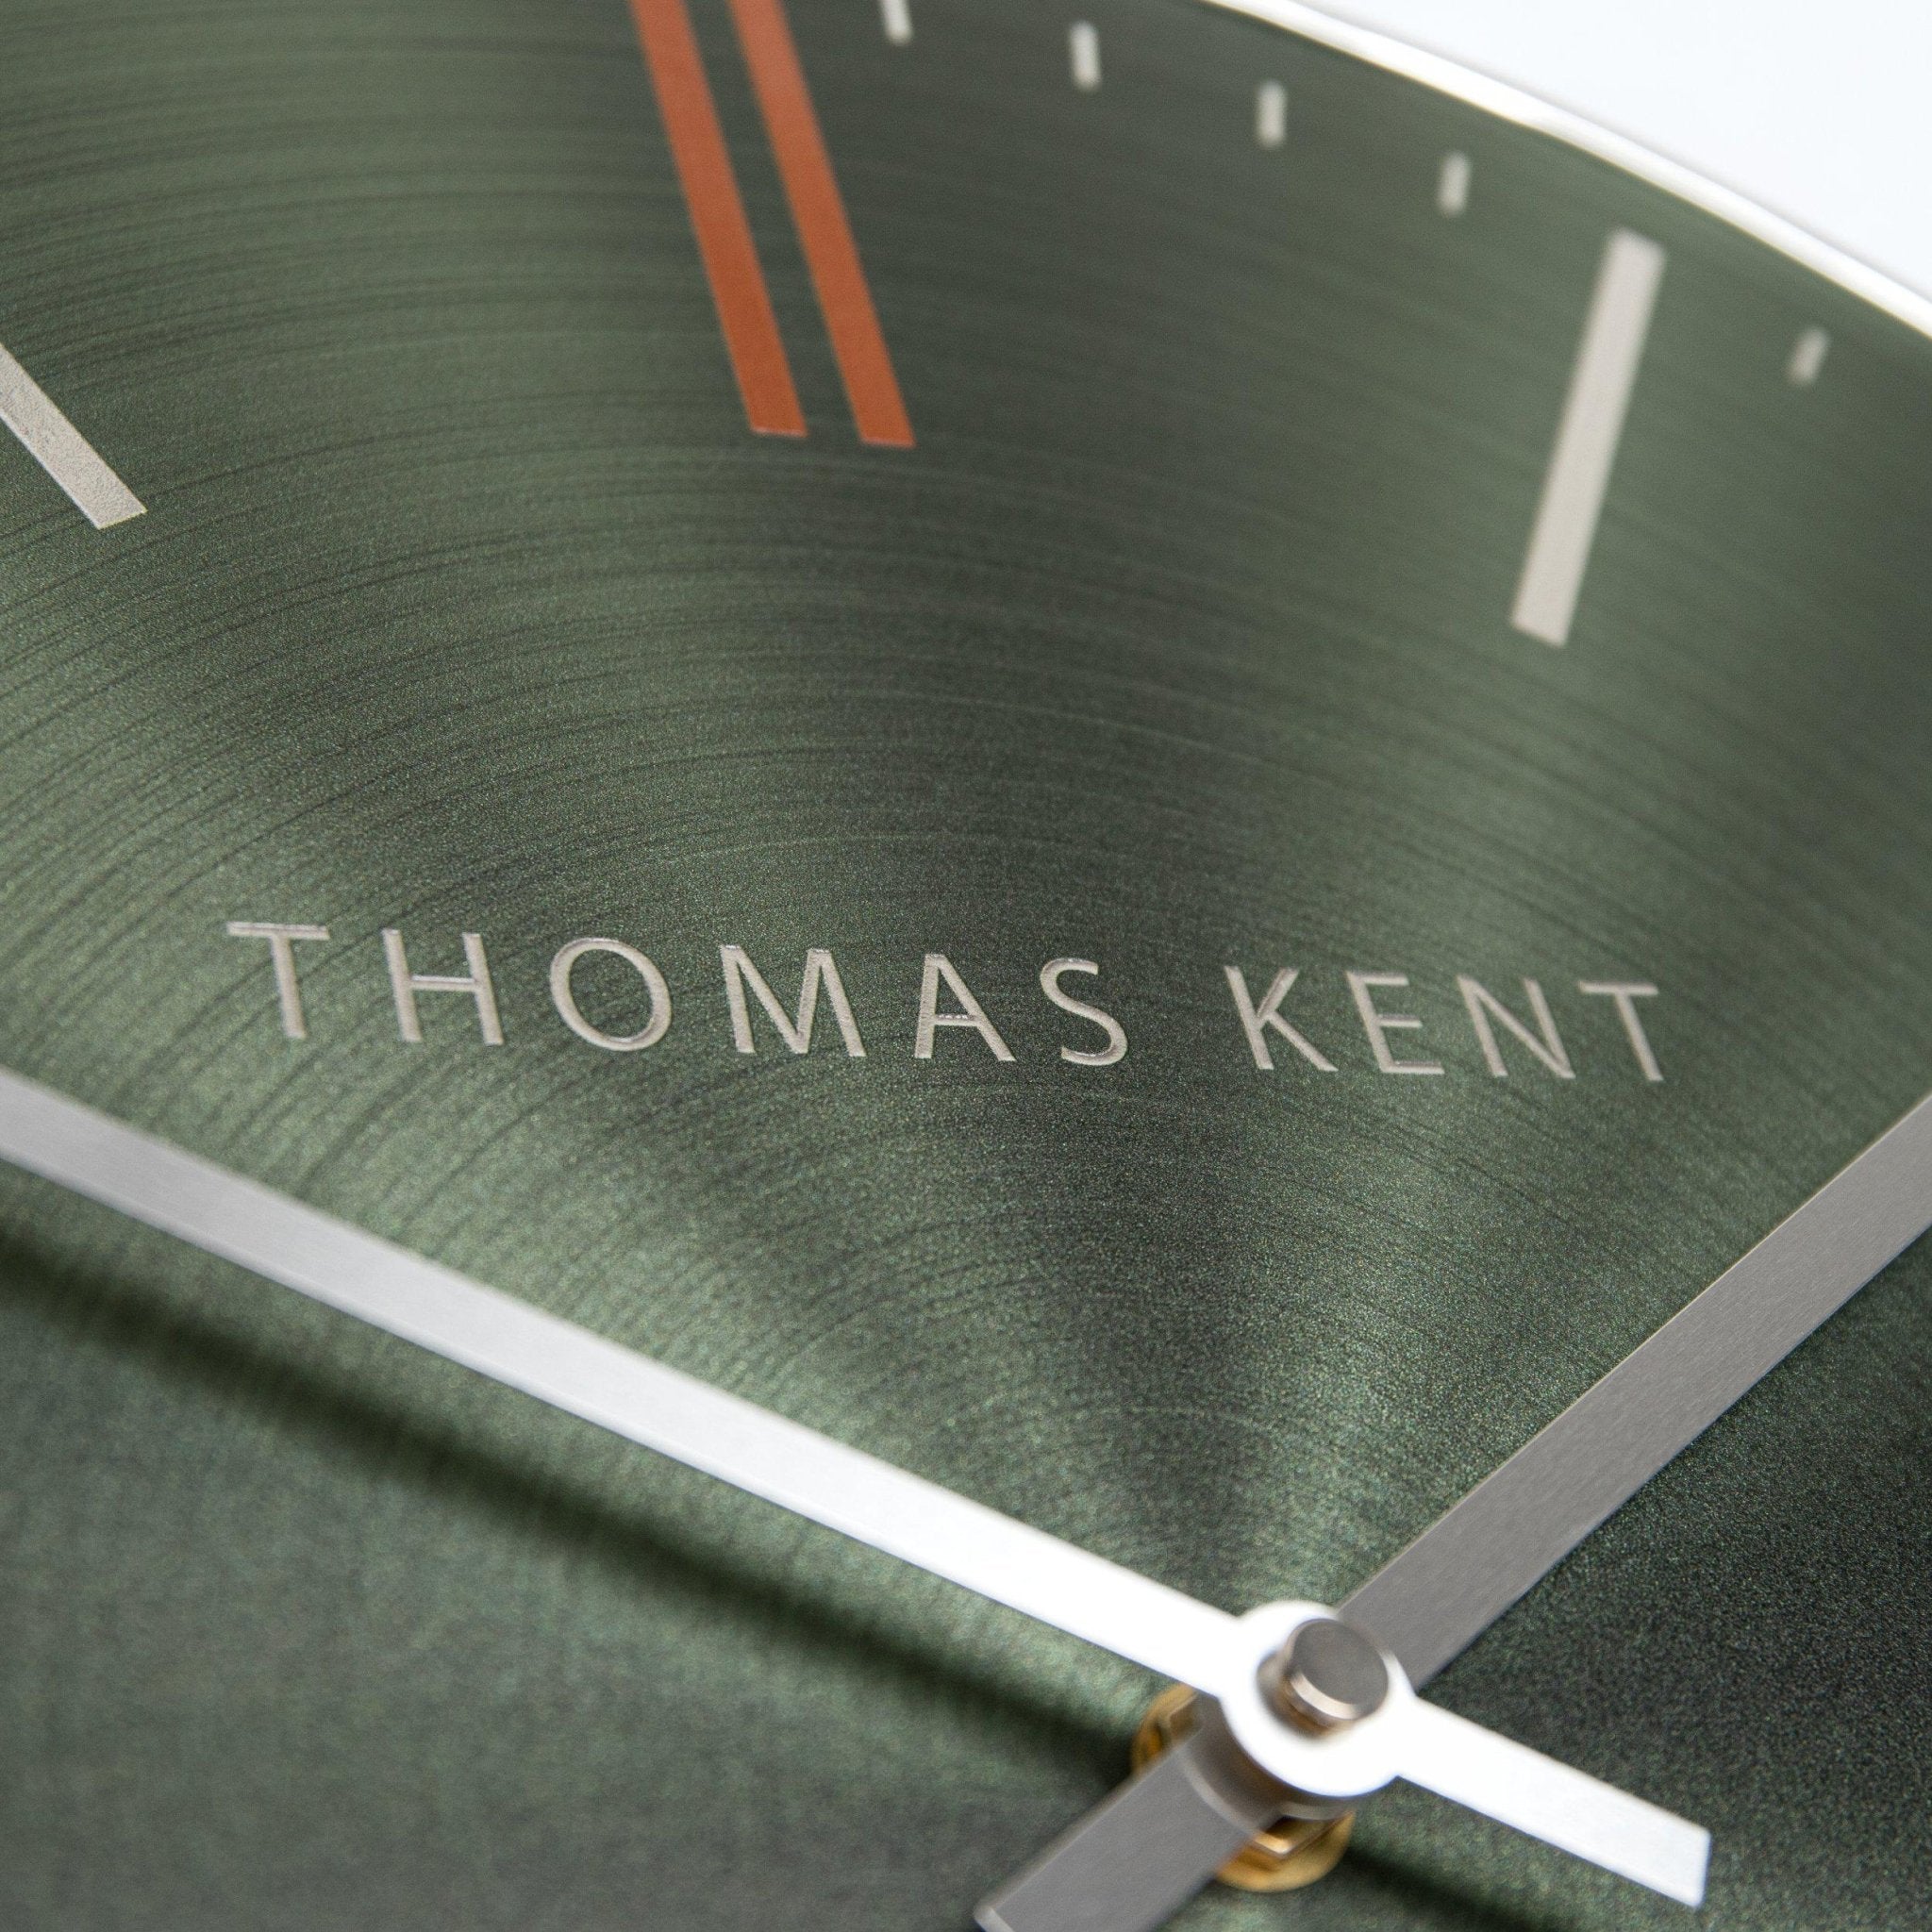 Thomas Kent Bistro Wall Clock - Emerald 35cm - Duck Barn Interiors